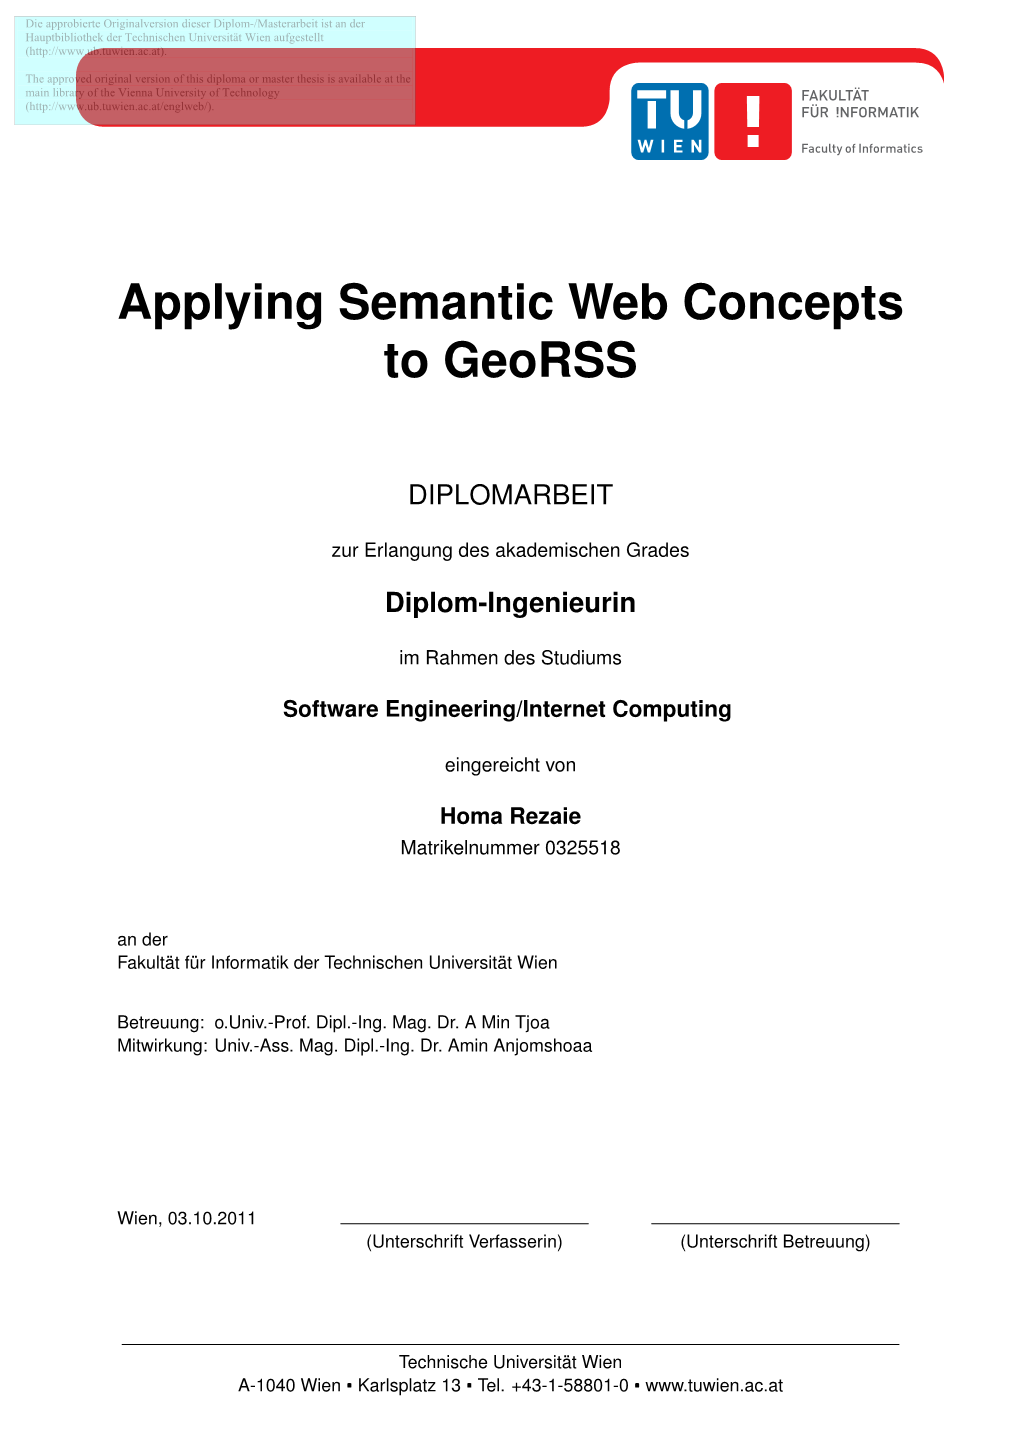 Applying Semantic Web Concepts to Georss